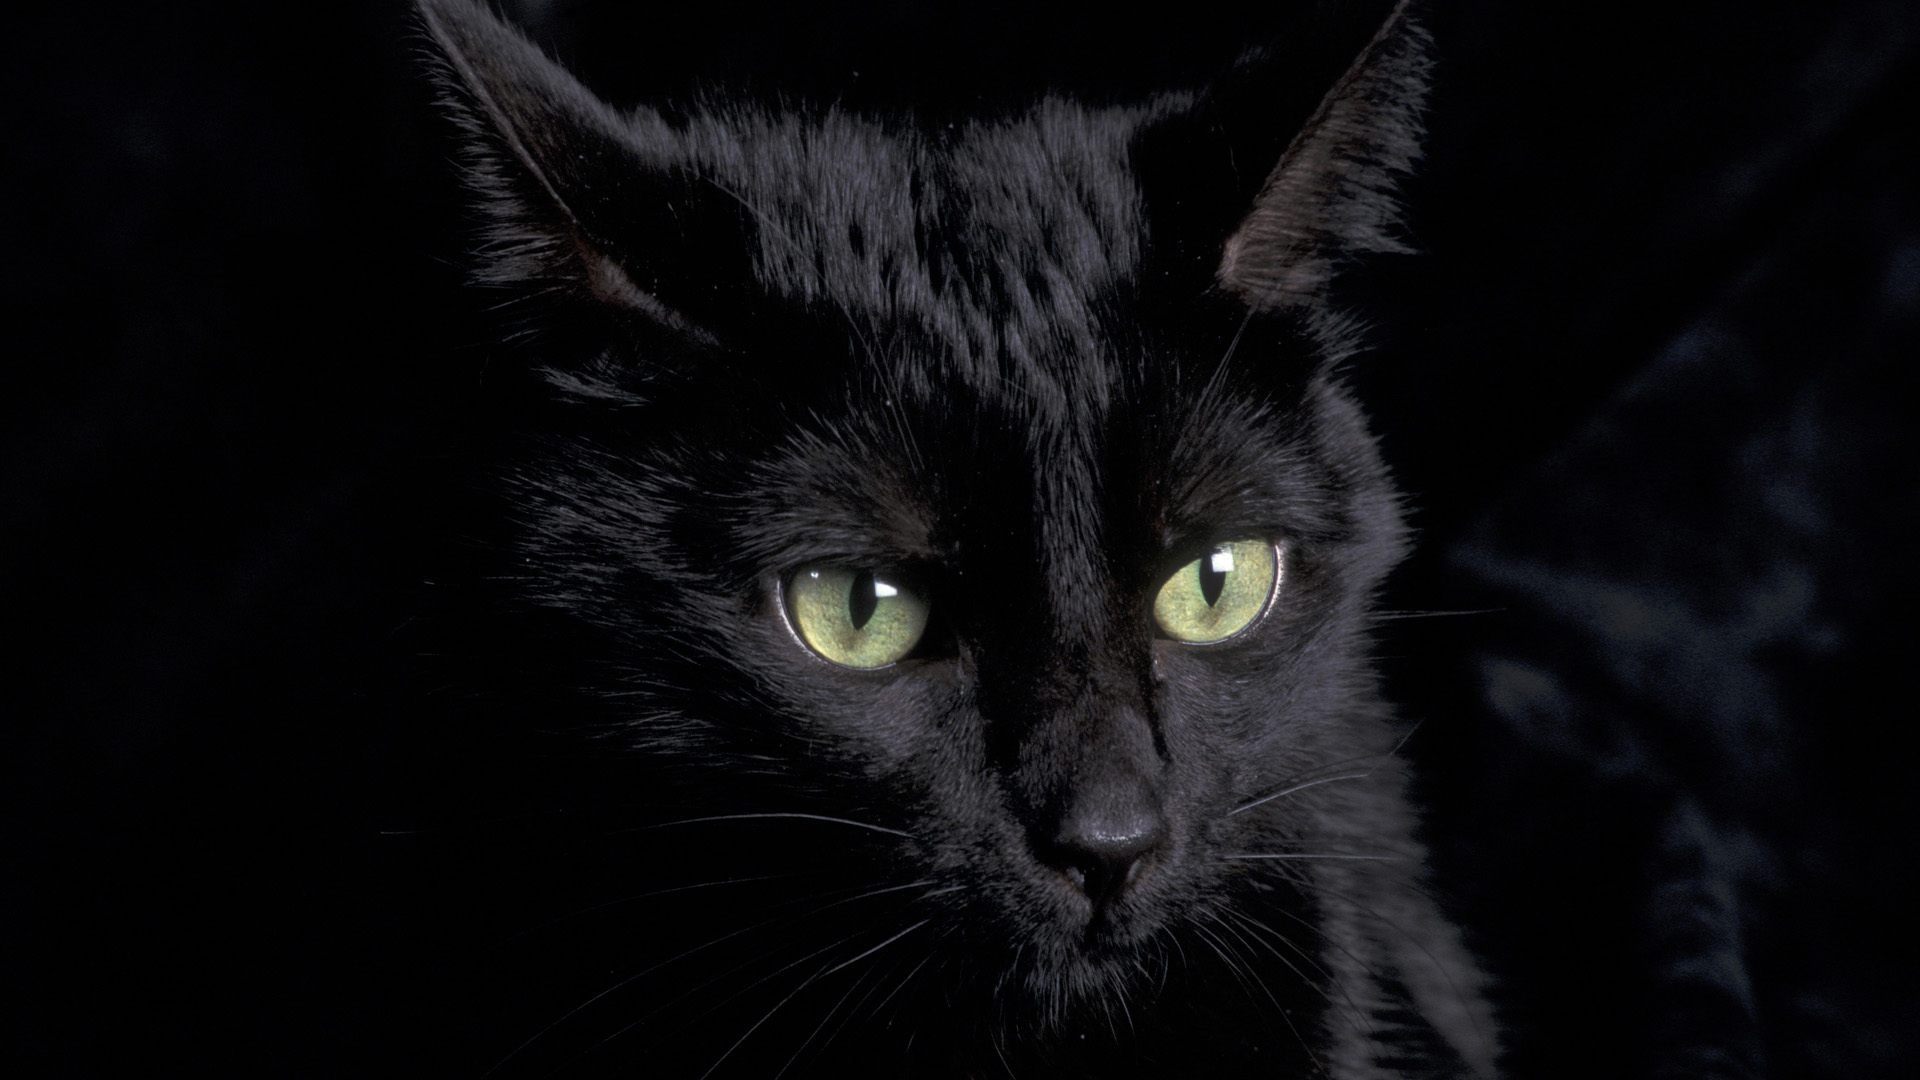 Fondos de pantalla de gatos negros - FondosMil